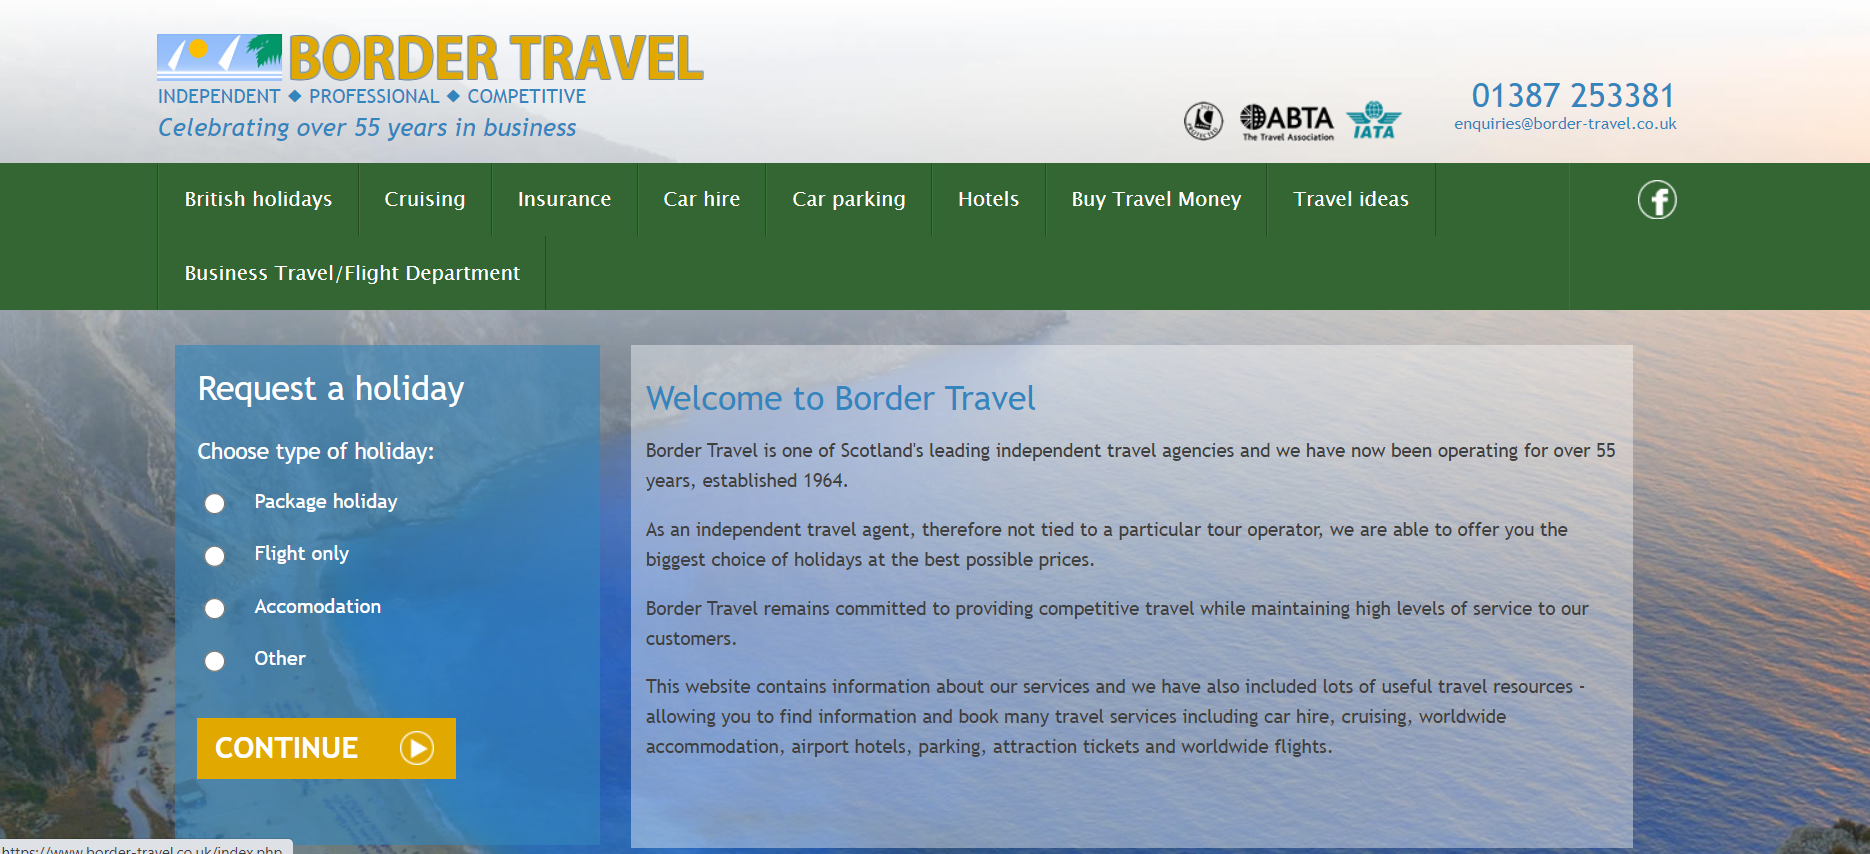 Border Travel Services Ltd